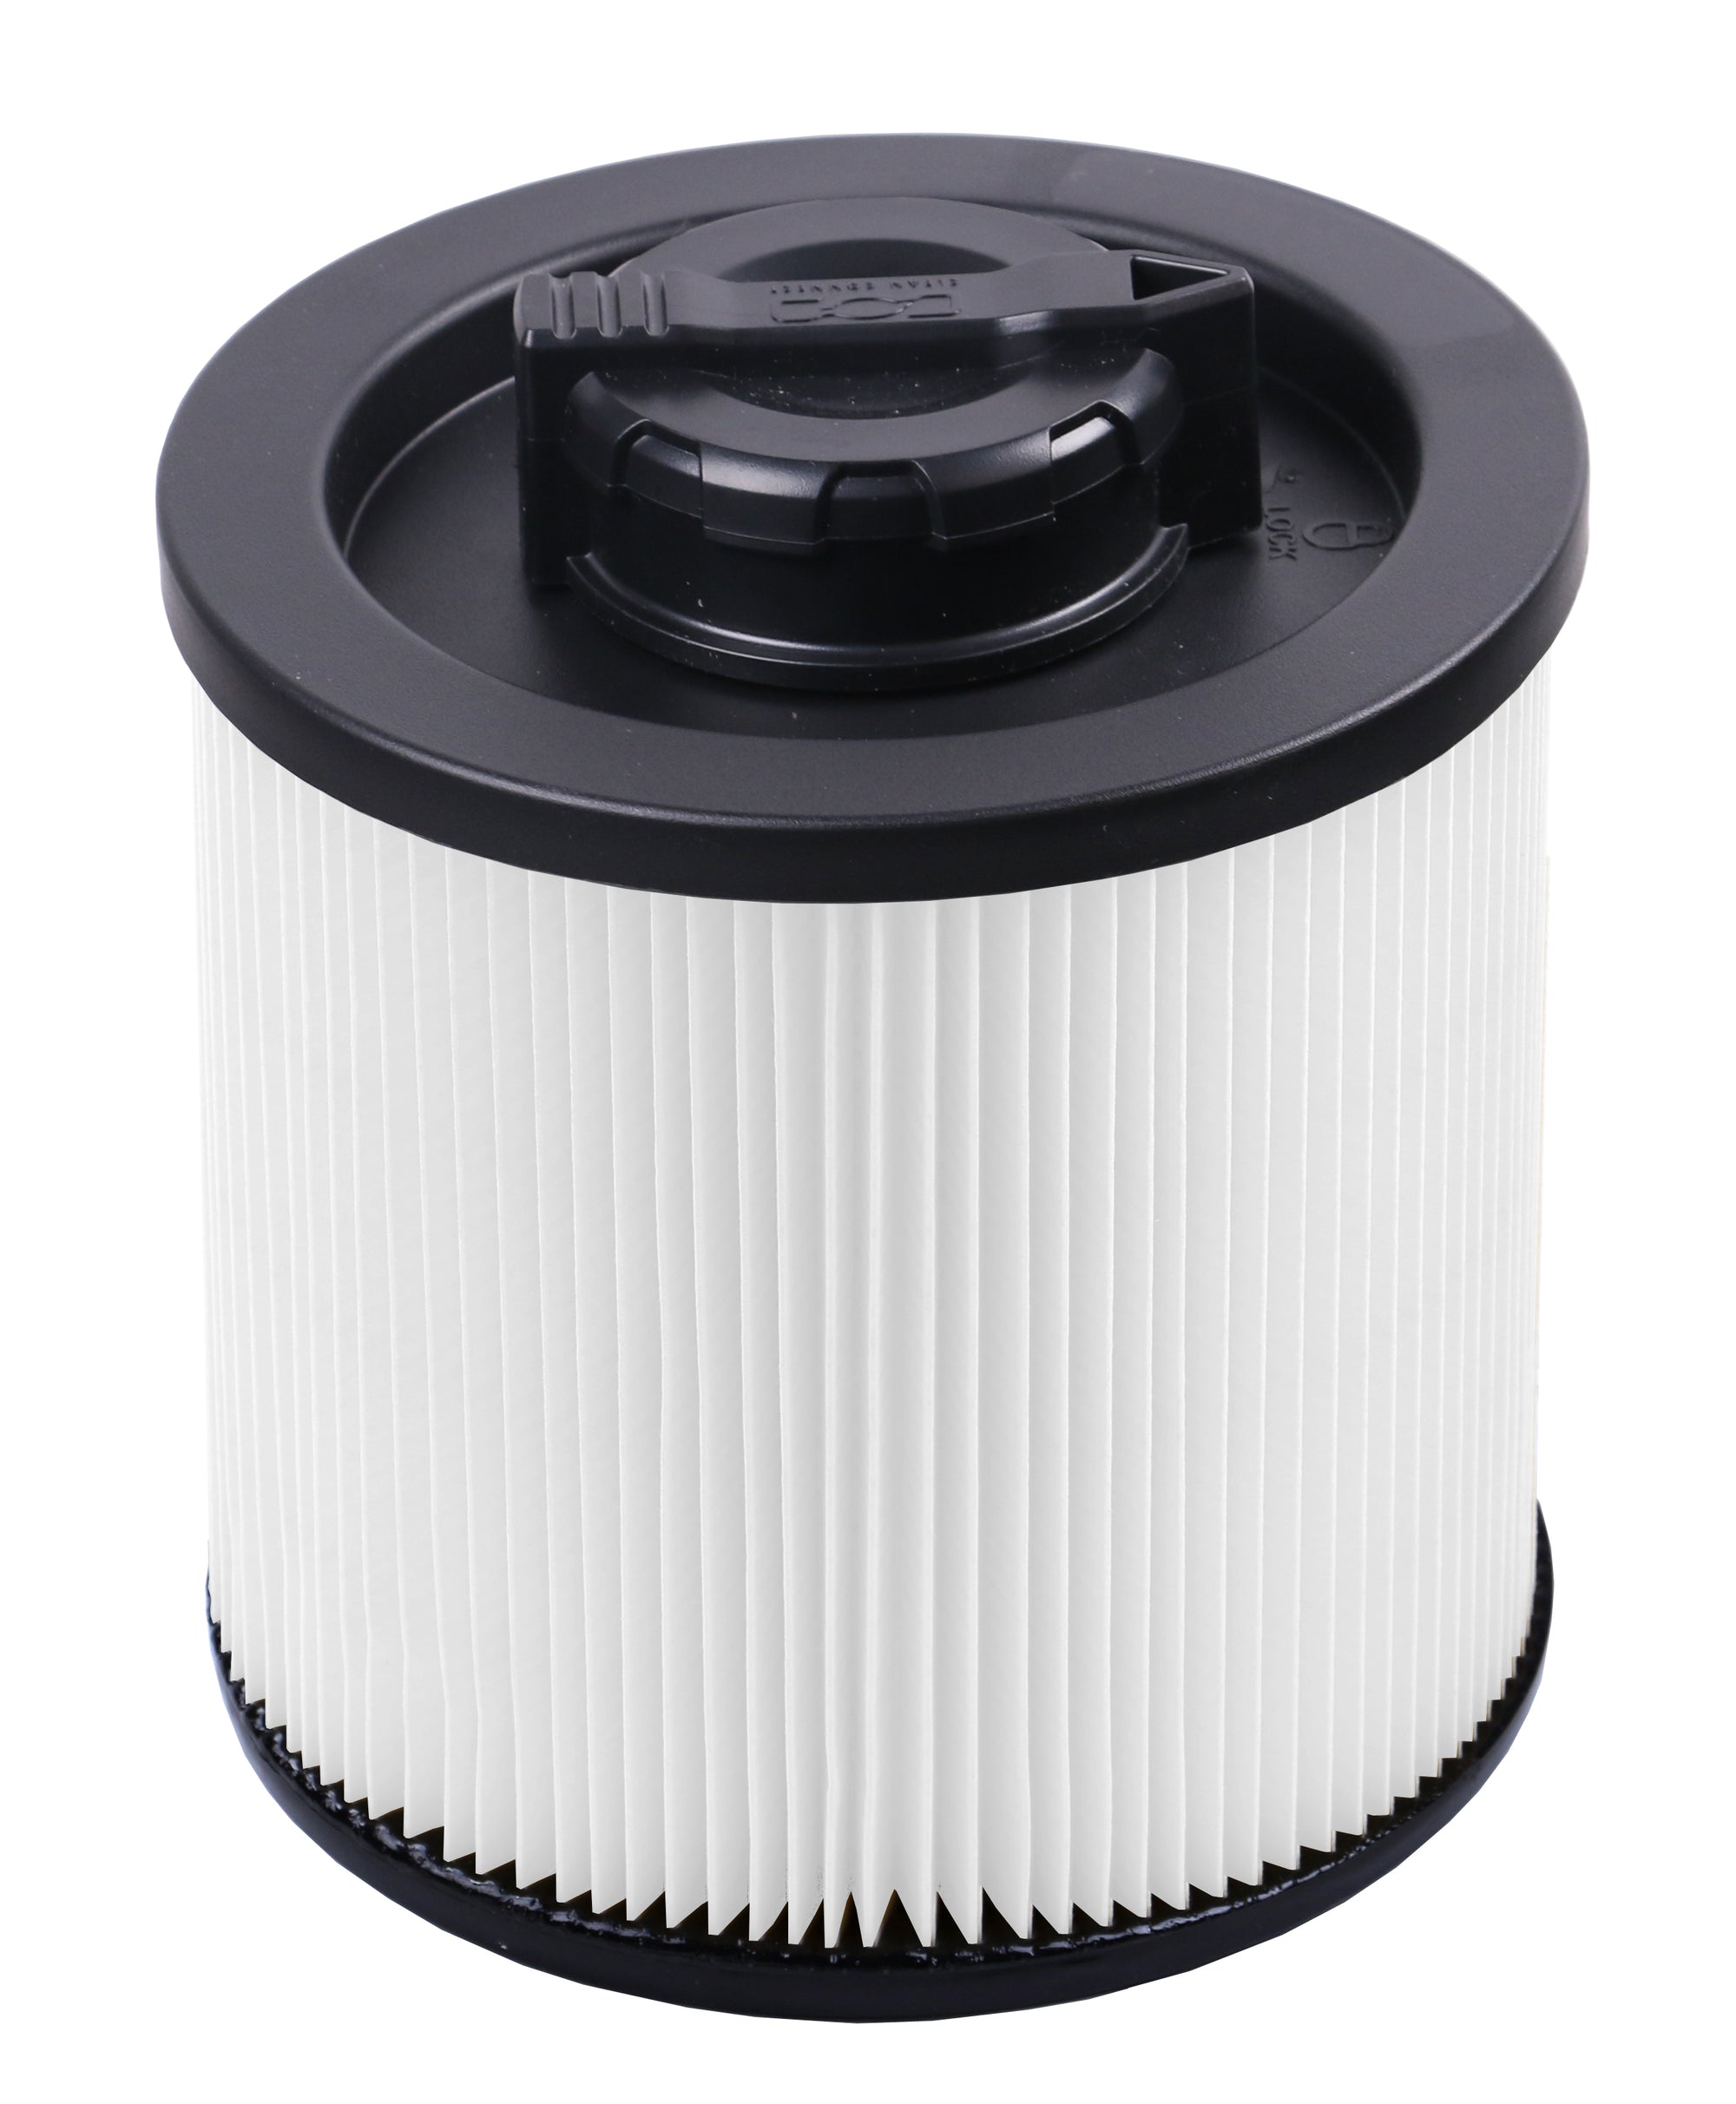 DXVC6910  DeWalt Standard Cartridge Filter for 6-16 Gallon DeWalt Wet/Dry Vacuums